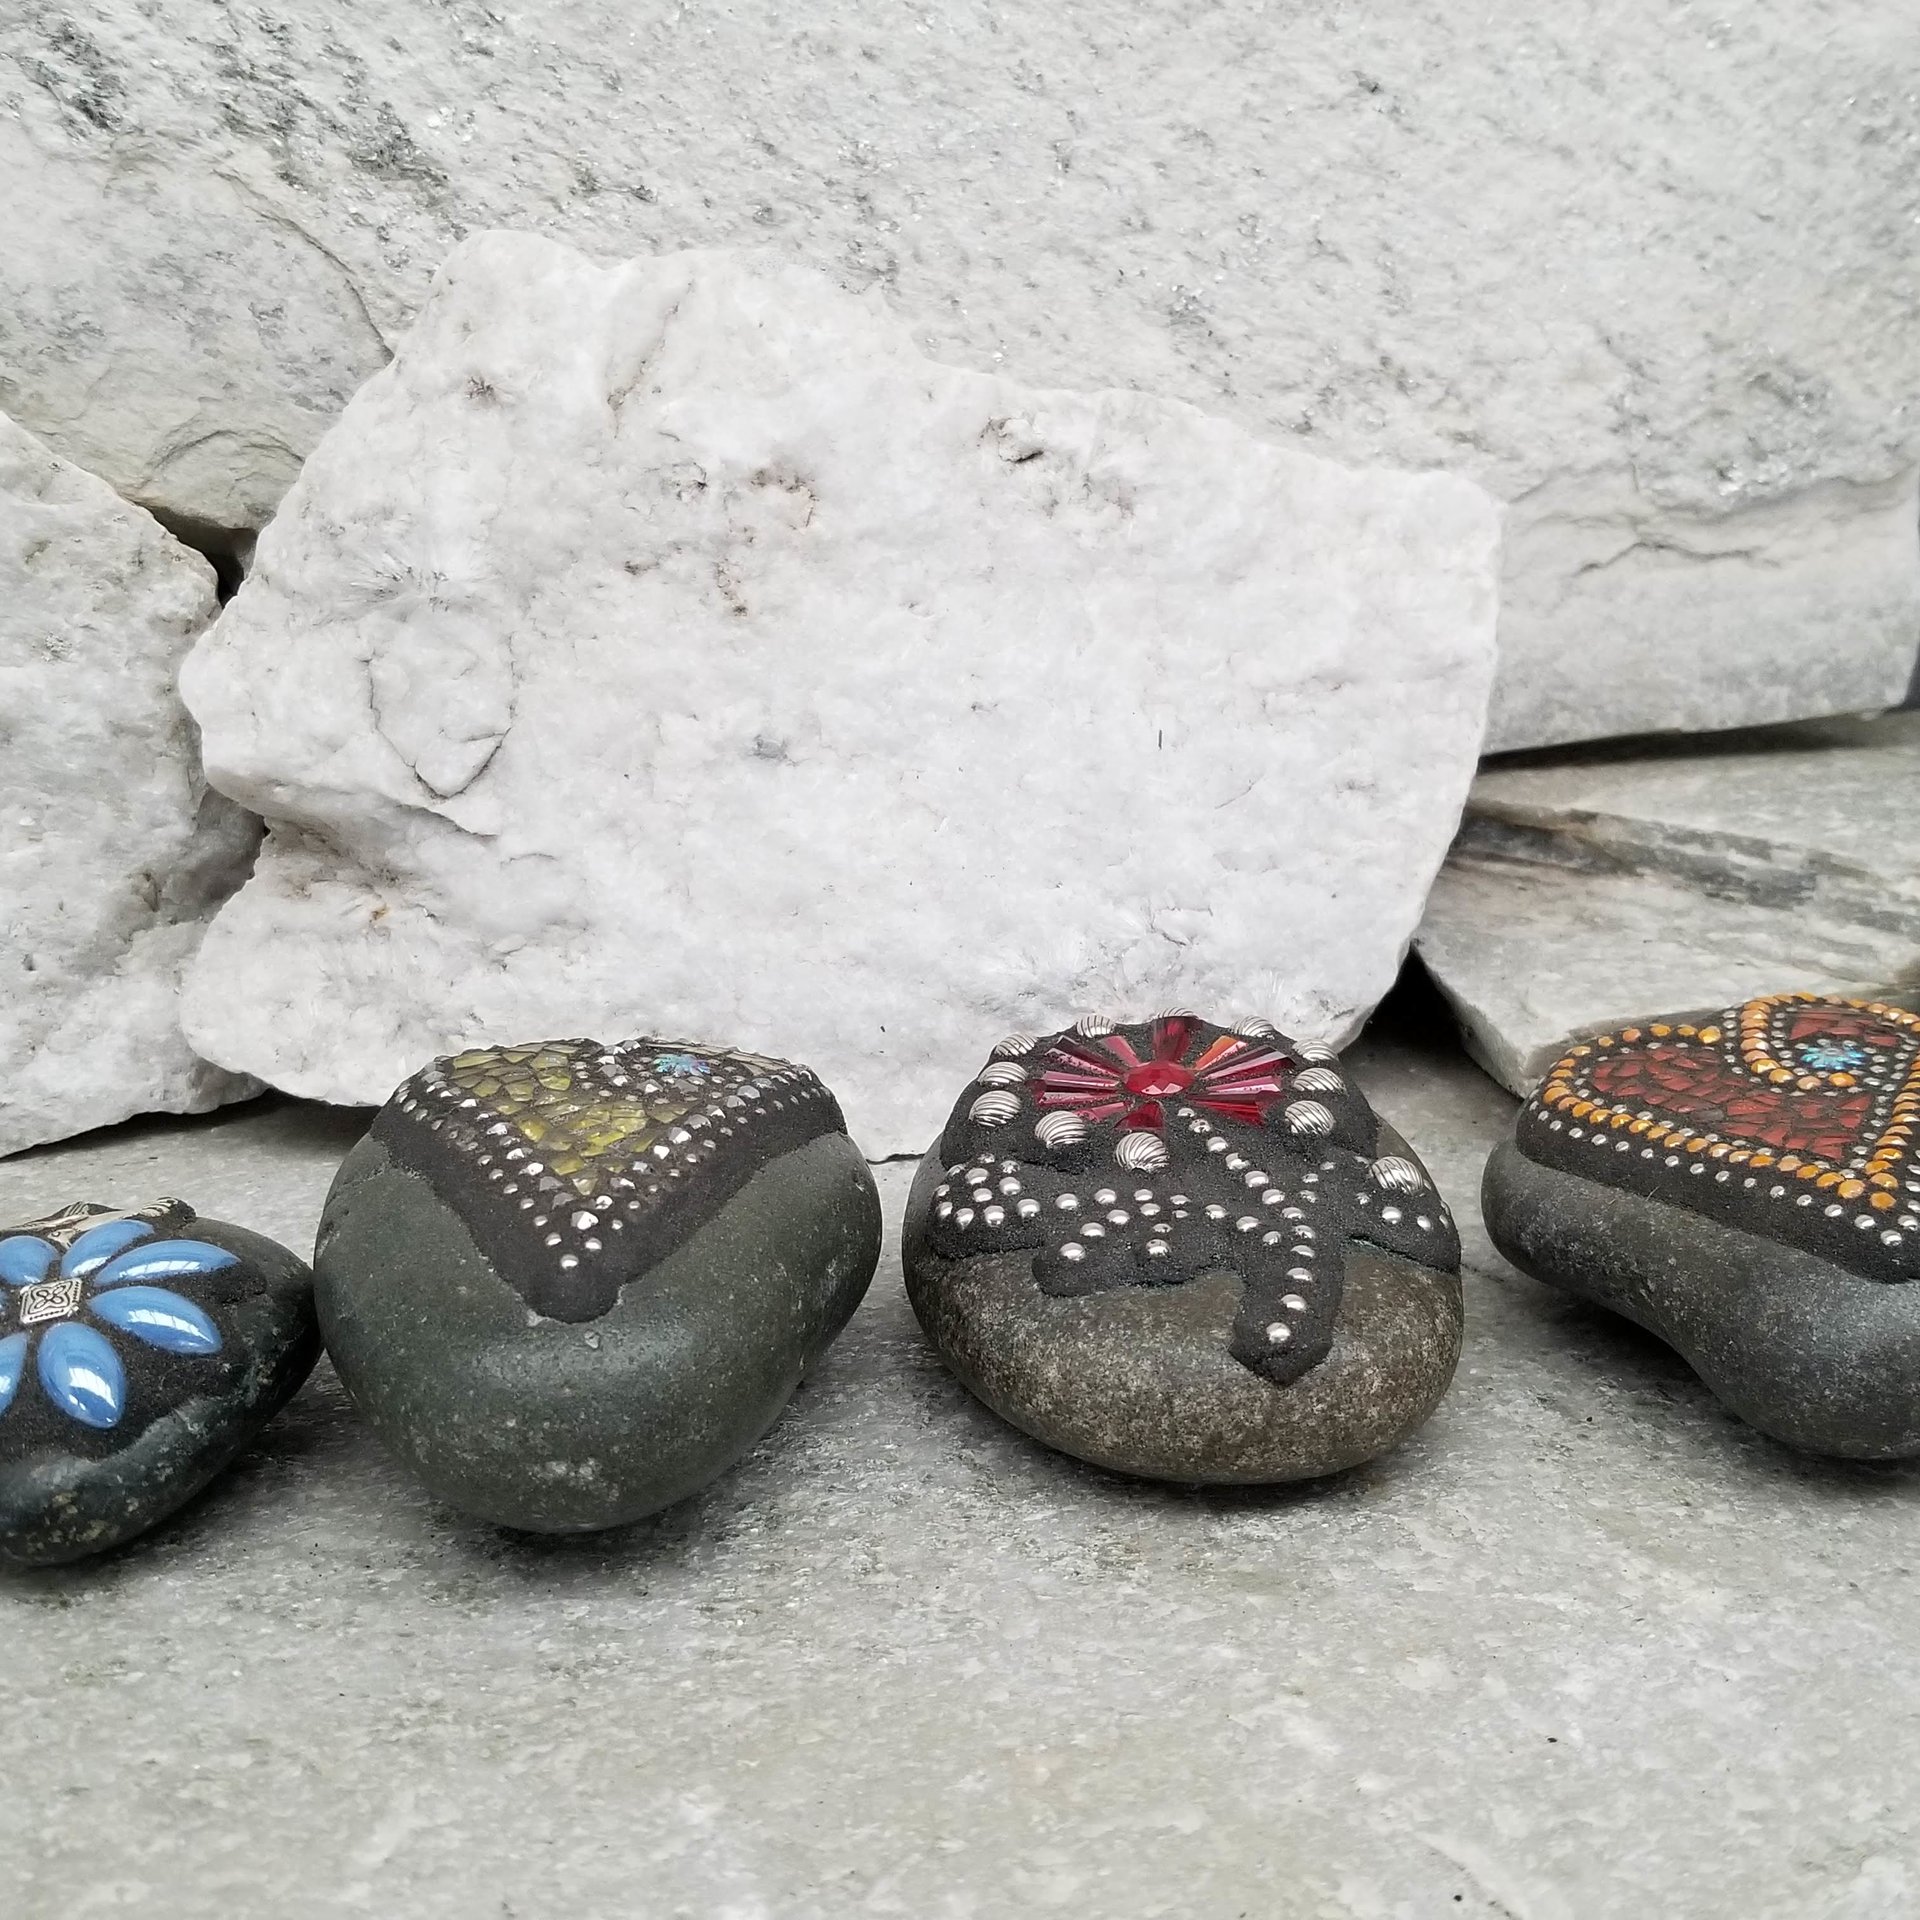 Garden Stone Paperweights, Secret Santa Stocking Stuffer, #7 Group Mosaic Heart and Rocks, Mosaic Garden Stone, Home Decor, Gardening, Gardening Gift,